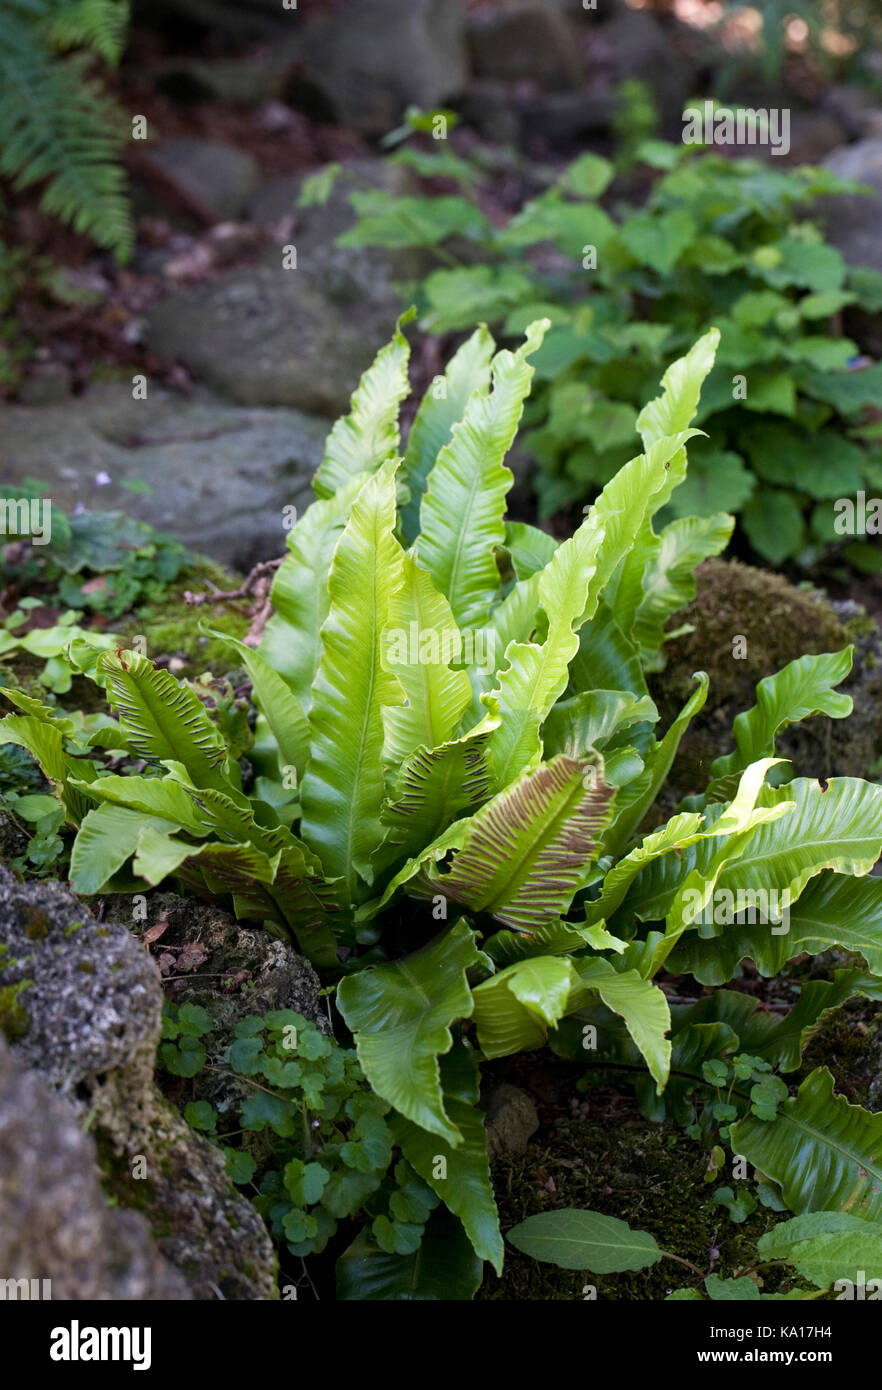 Asplenium scolopendrium. Hart's tongue fern. Stock Photo